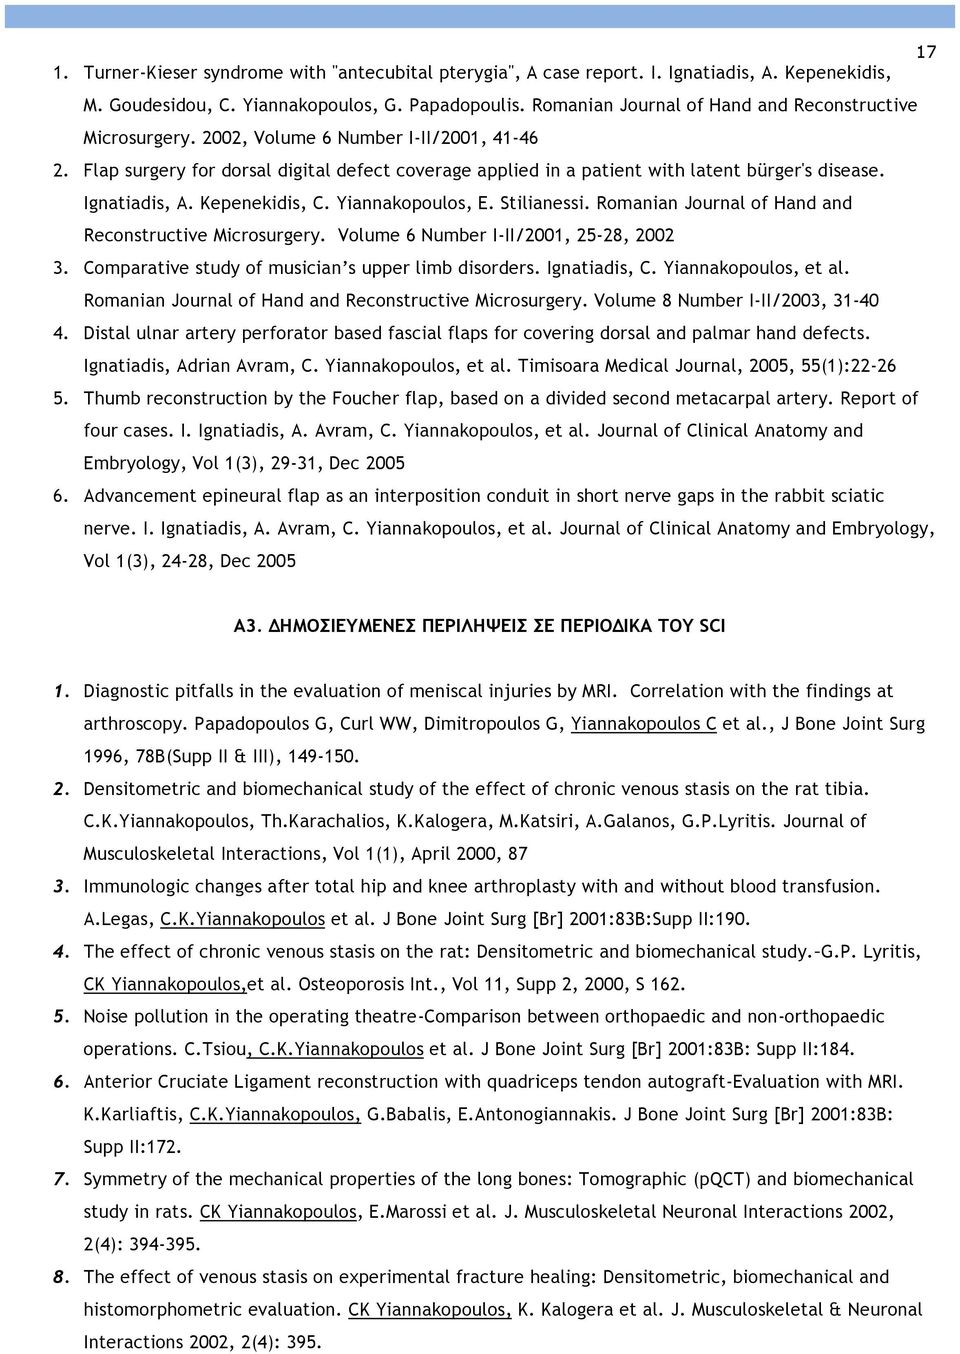 Ignatiadis, A. Kepenekidis, C. Yiannakopoulos, E. Stilianessi. Romanian Journal of Hand and Reconstructive Microsurgery. Volume 6 Number I-II/2001, 25-28, 2002 3.